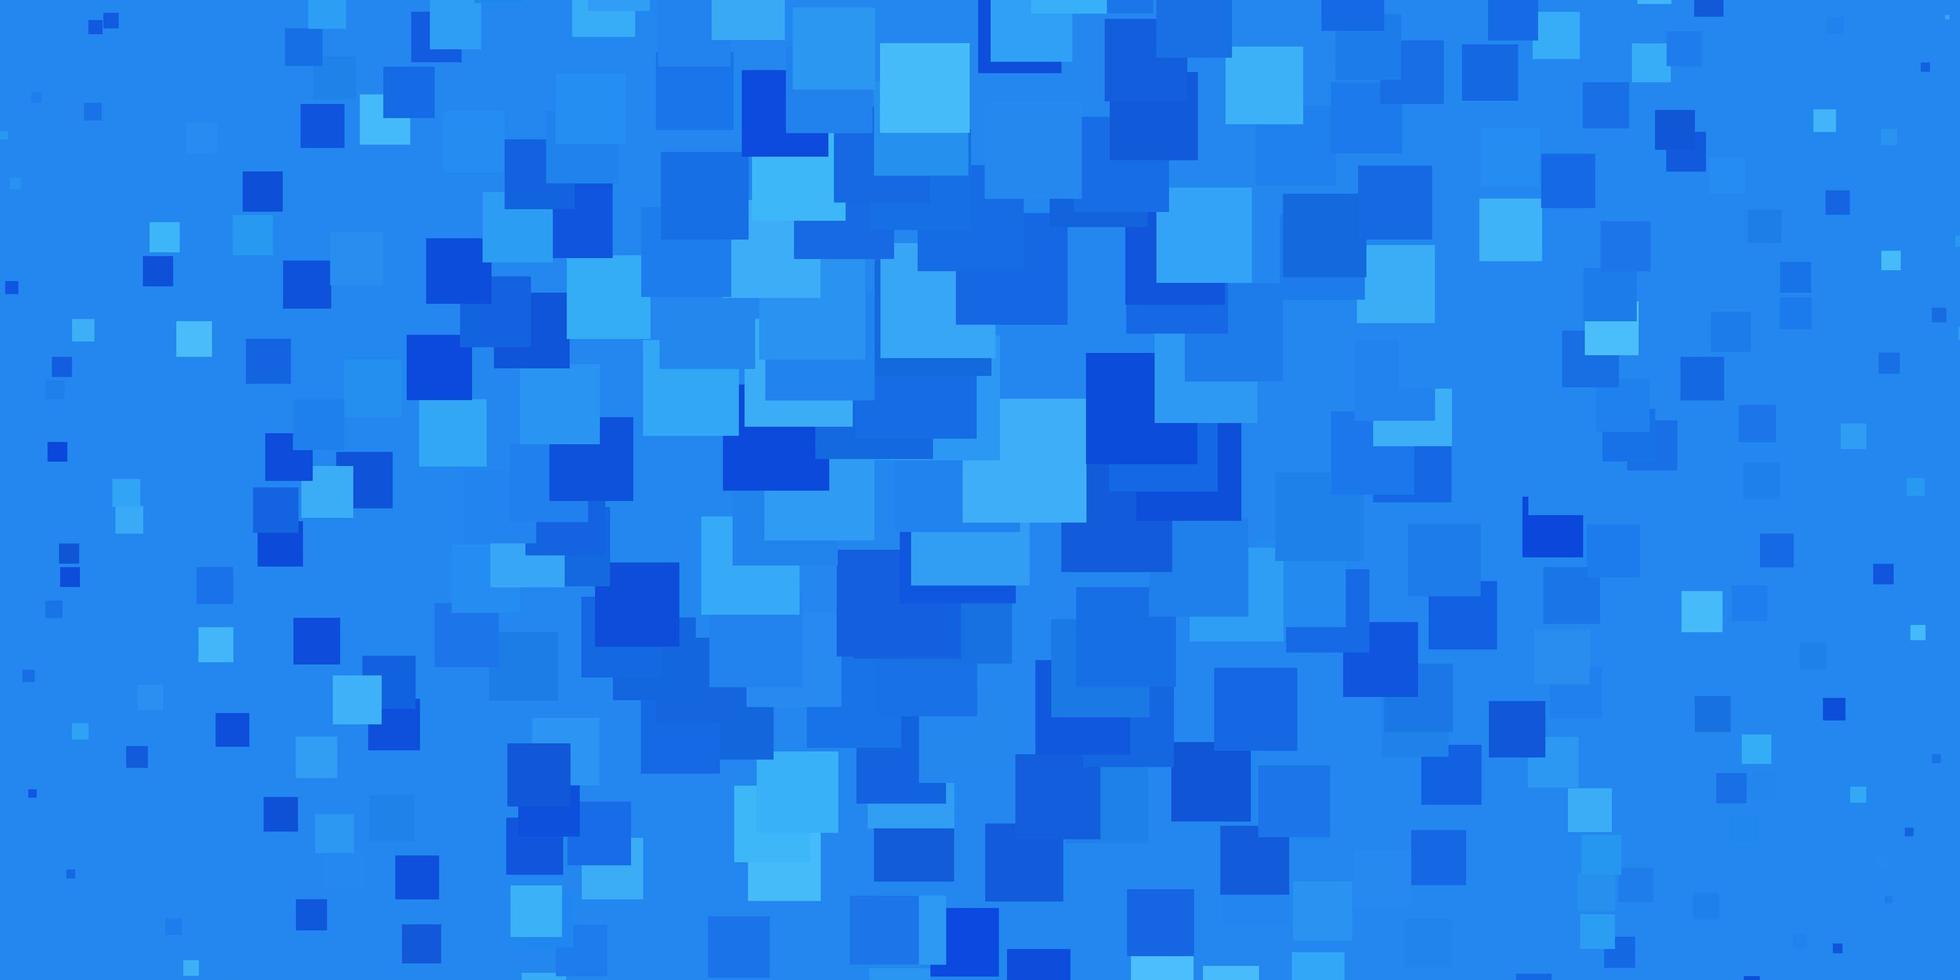 textura de vector azul claro en estilo rectangular nueva ilustración abstracta con plantilla de formas rectangulares para teléfonos móviles